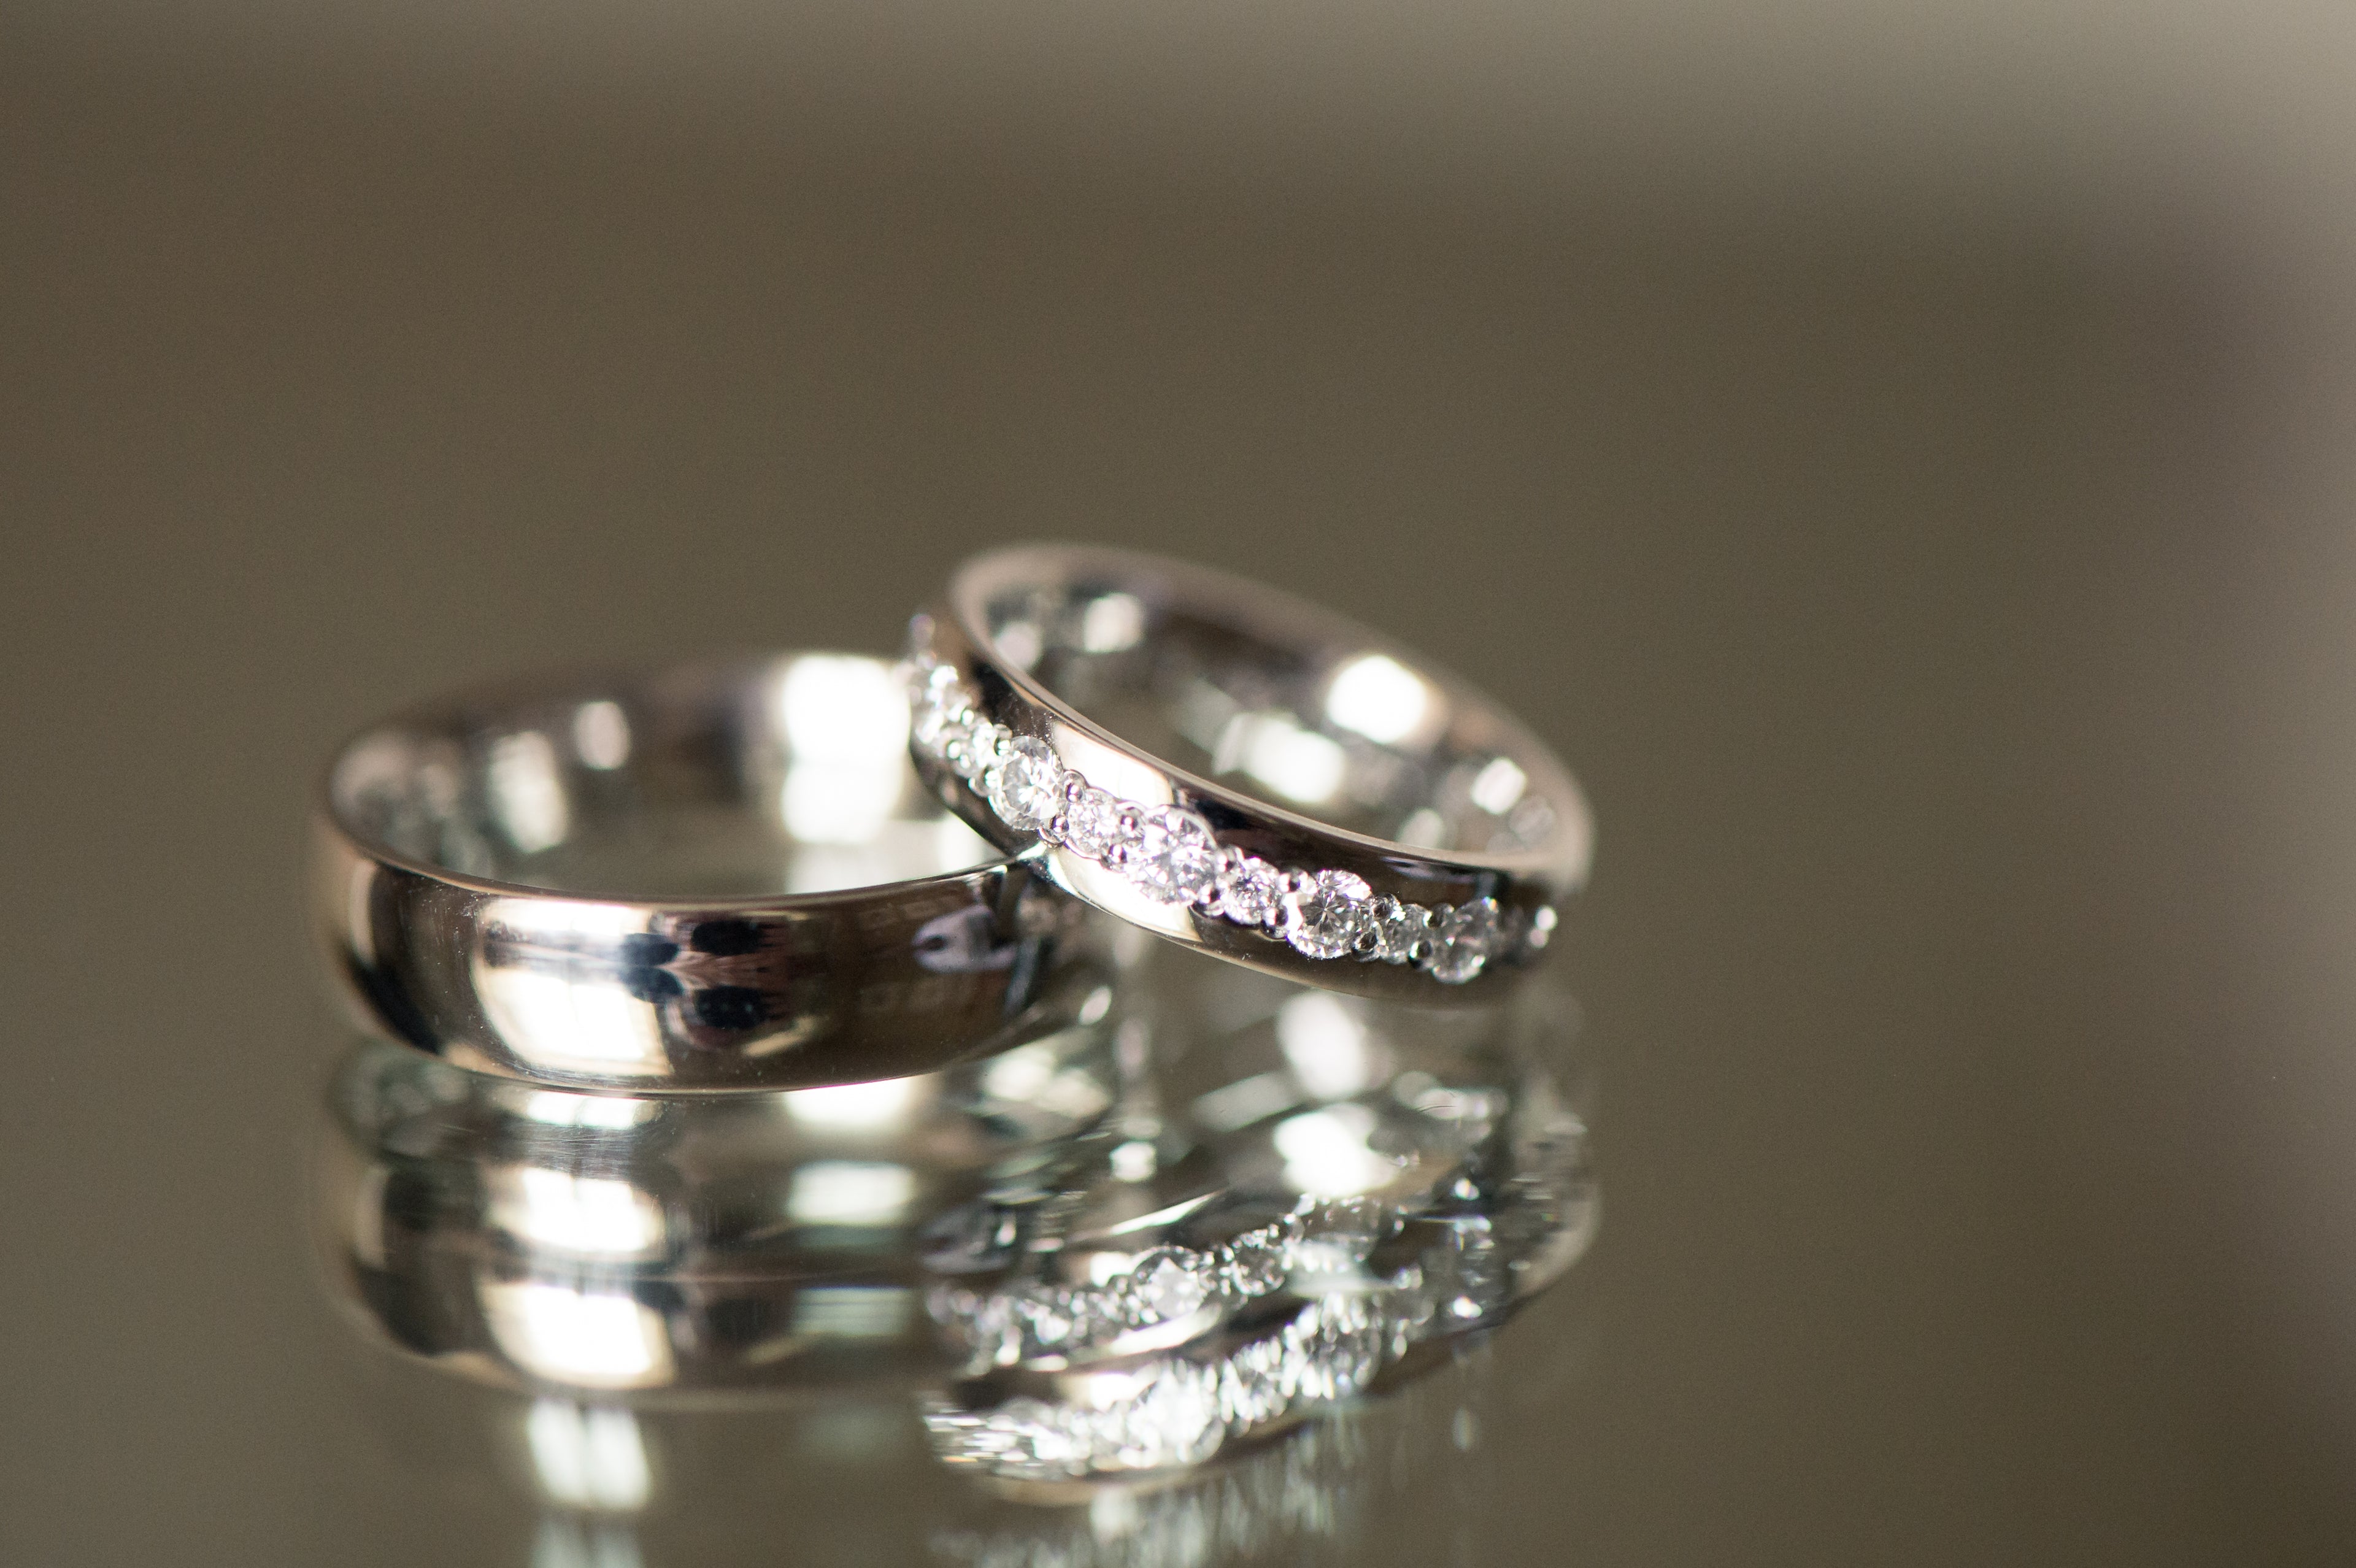 Wedding Ring Pair in Sutton Coldfield